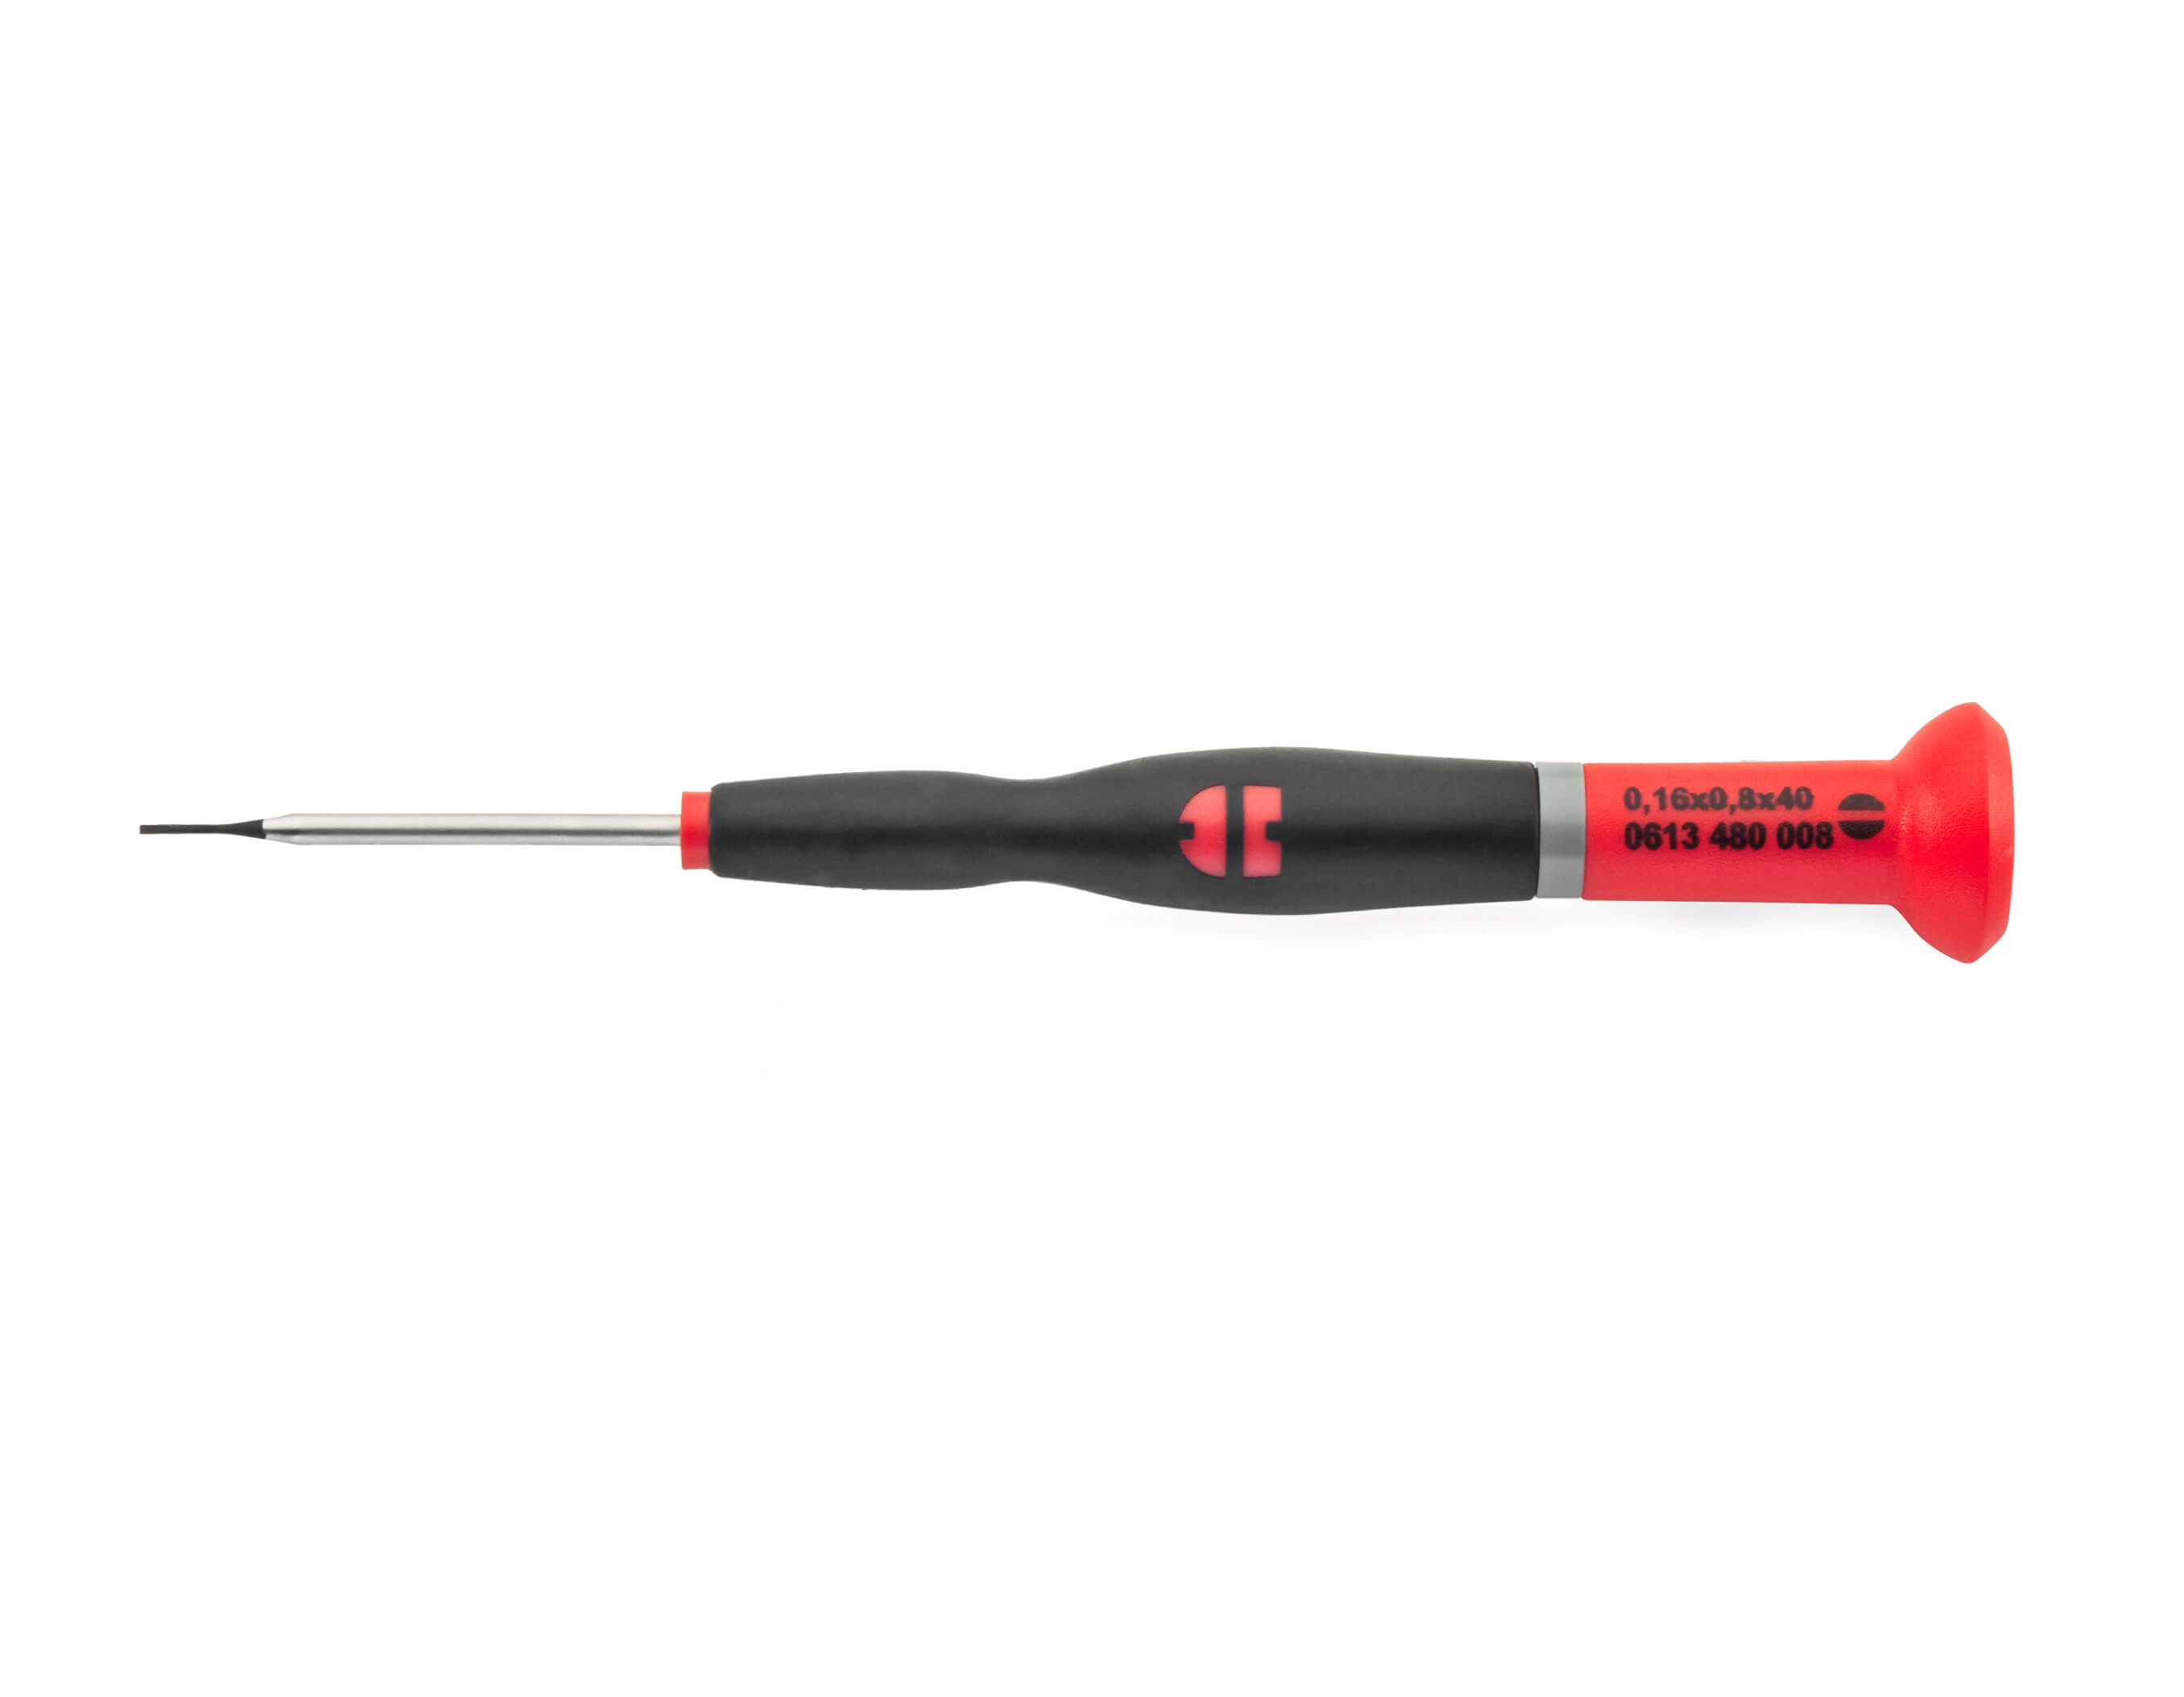 Precision screwdriver slt Black tip 0.30X1.5X40